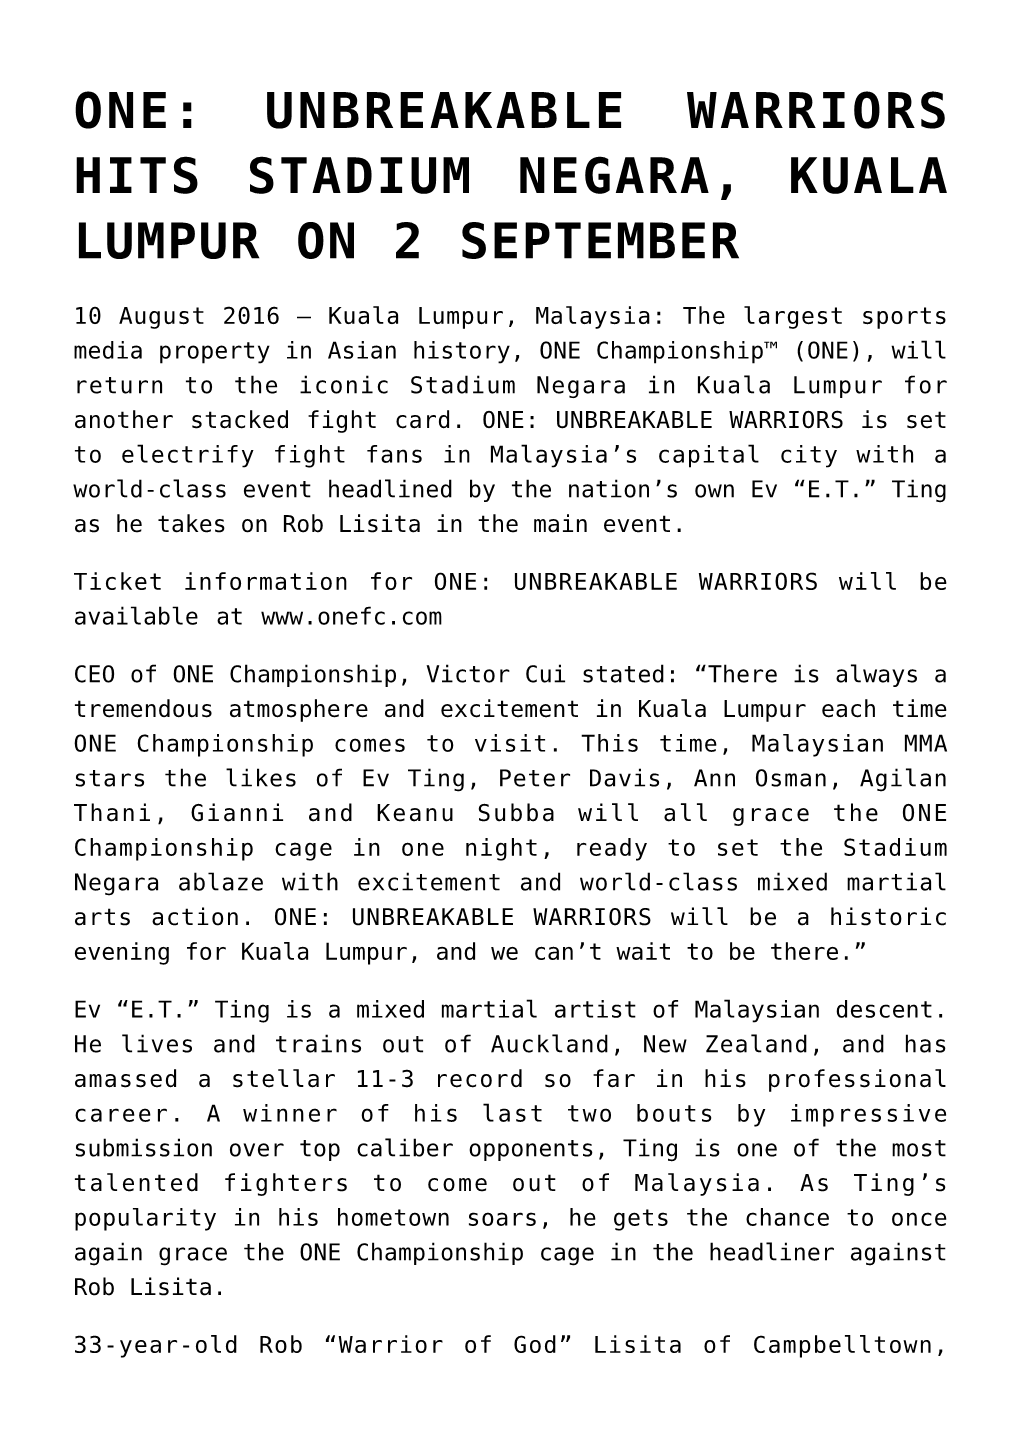 One: Unbreakable Warriors Hits Stadium Negara, Kuala Lumpur on 2 September